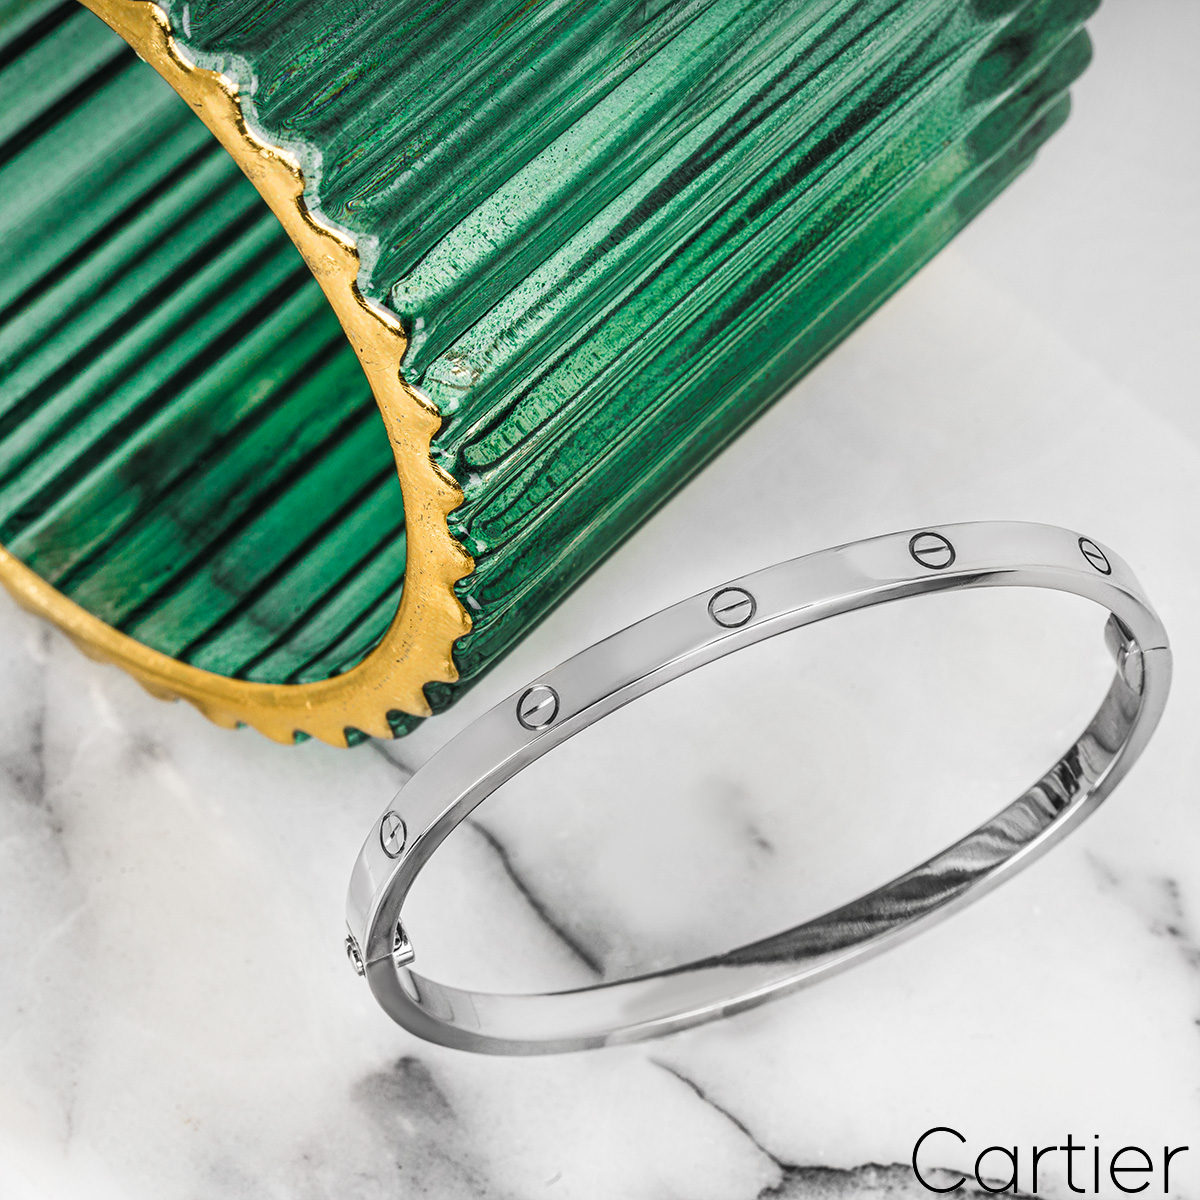 Cartier White Gold Plain SM Love Bracelet Size 15 B6047415